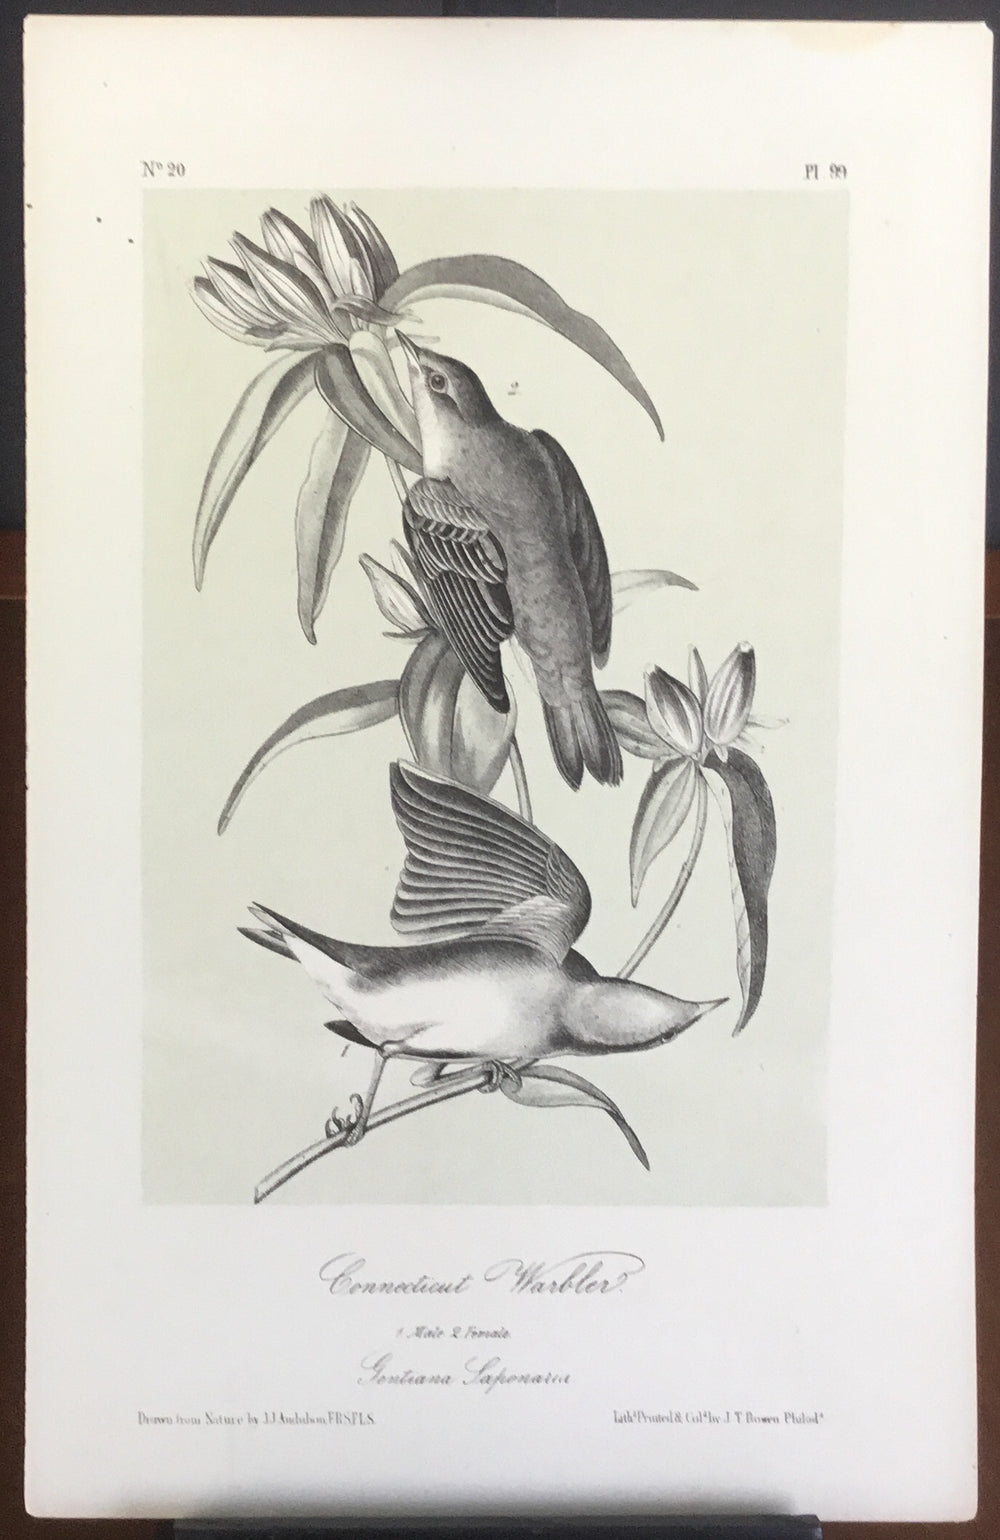 Audubon Octavo Connecticut Warbler, plate 99, uncolored test sheet, 7 x 11